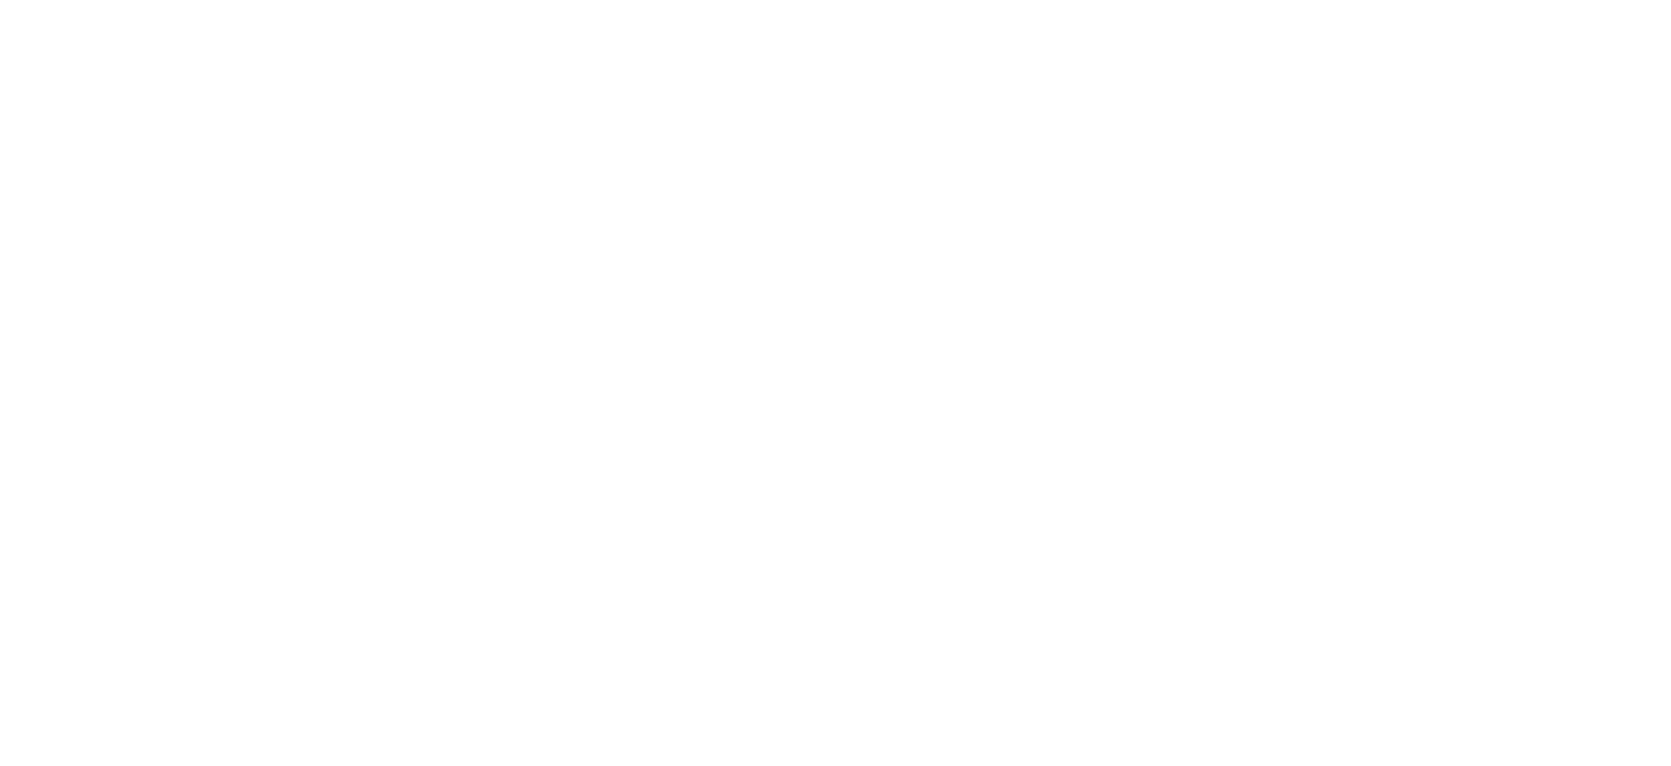 SNC-Lavalin Group logo large for dark backgrounds (transparent PNG)